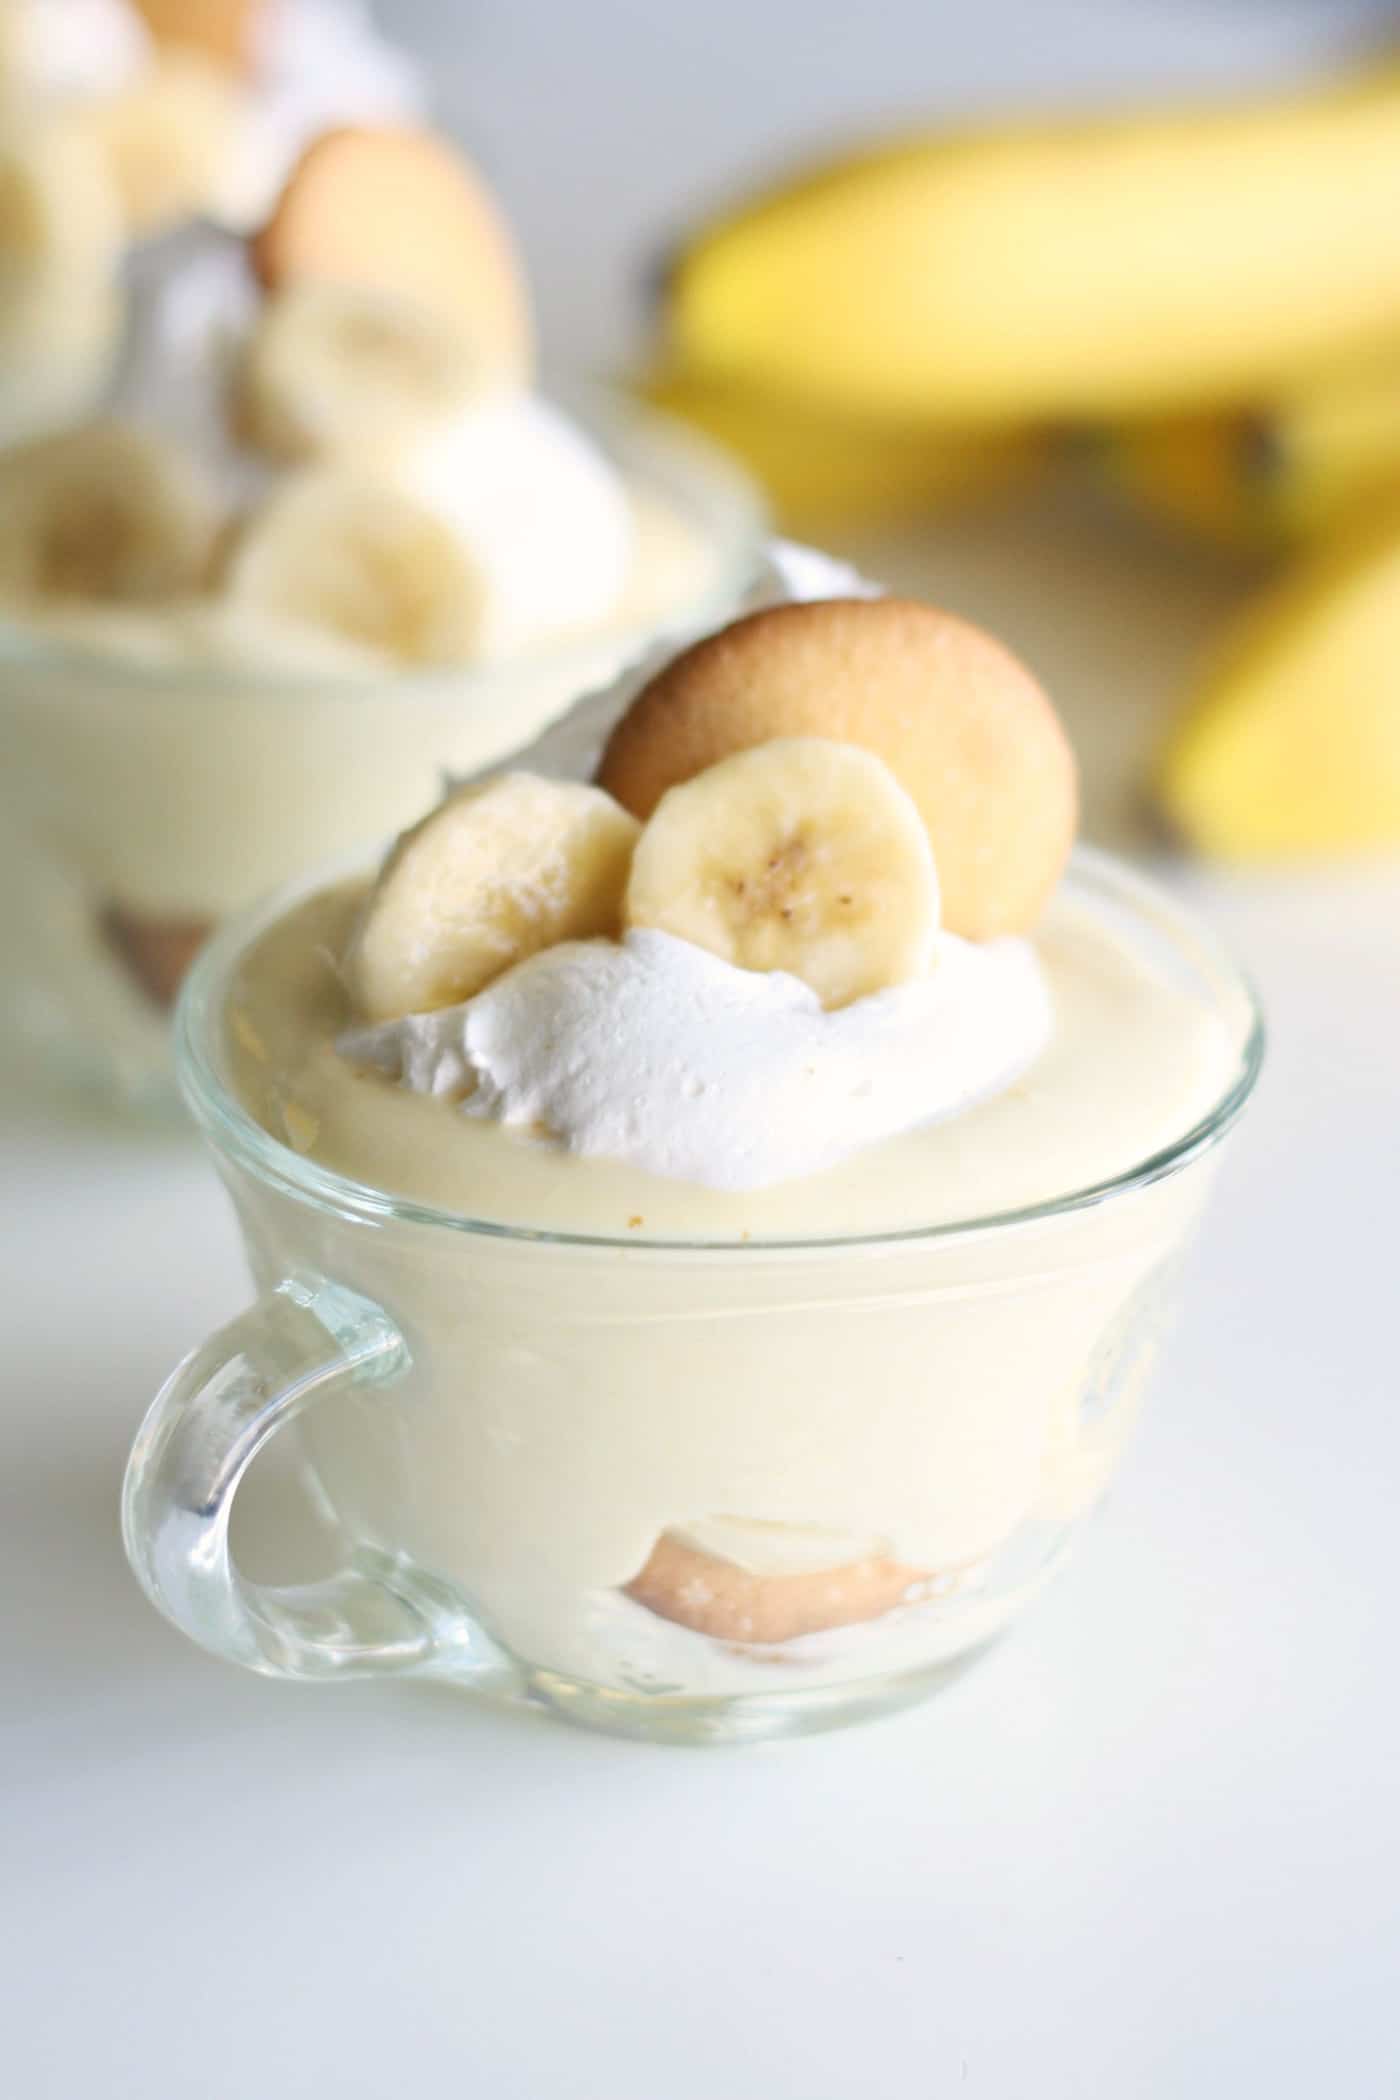 EASY Rich & Creamy Banana Pudding Recipe